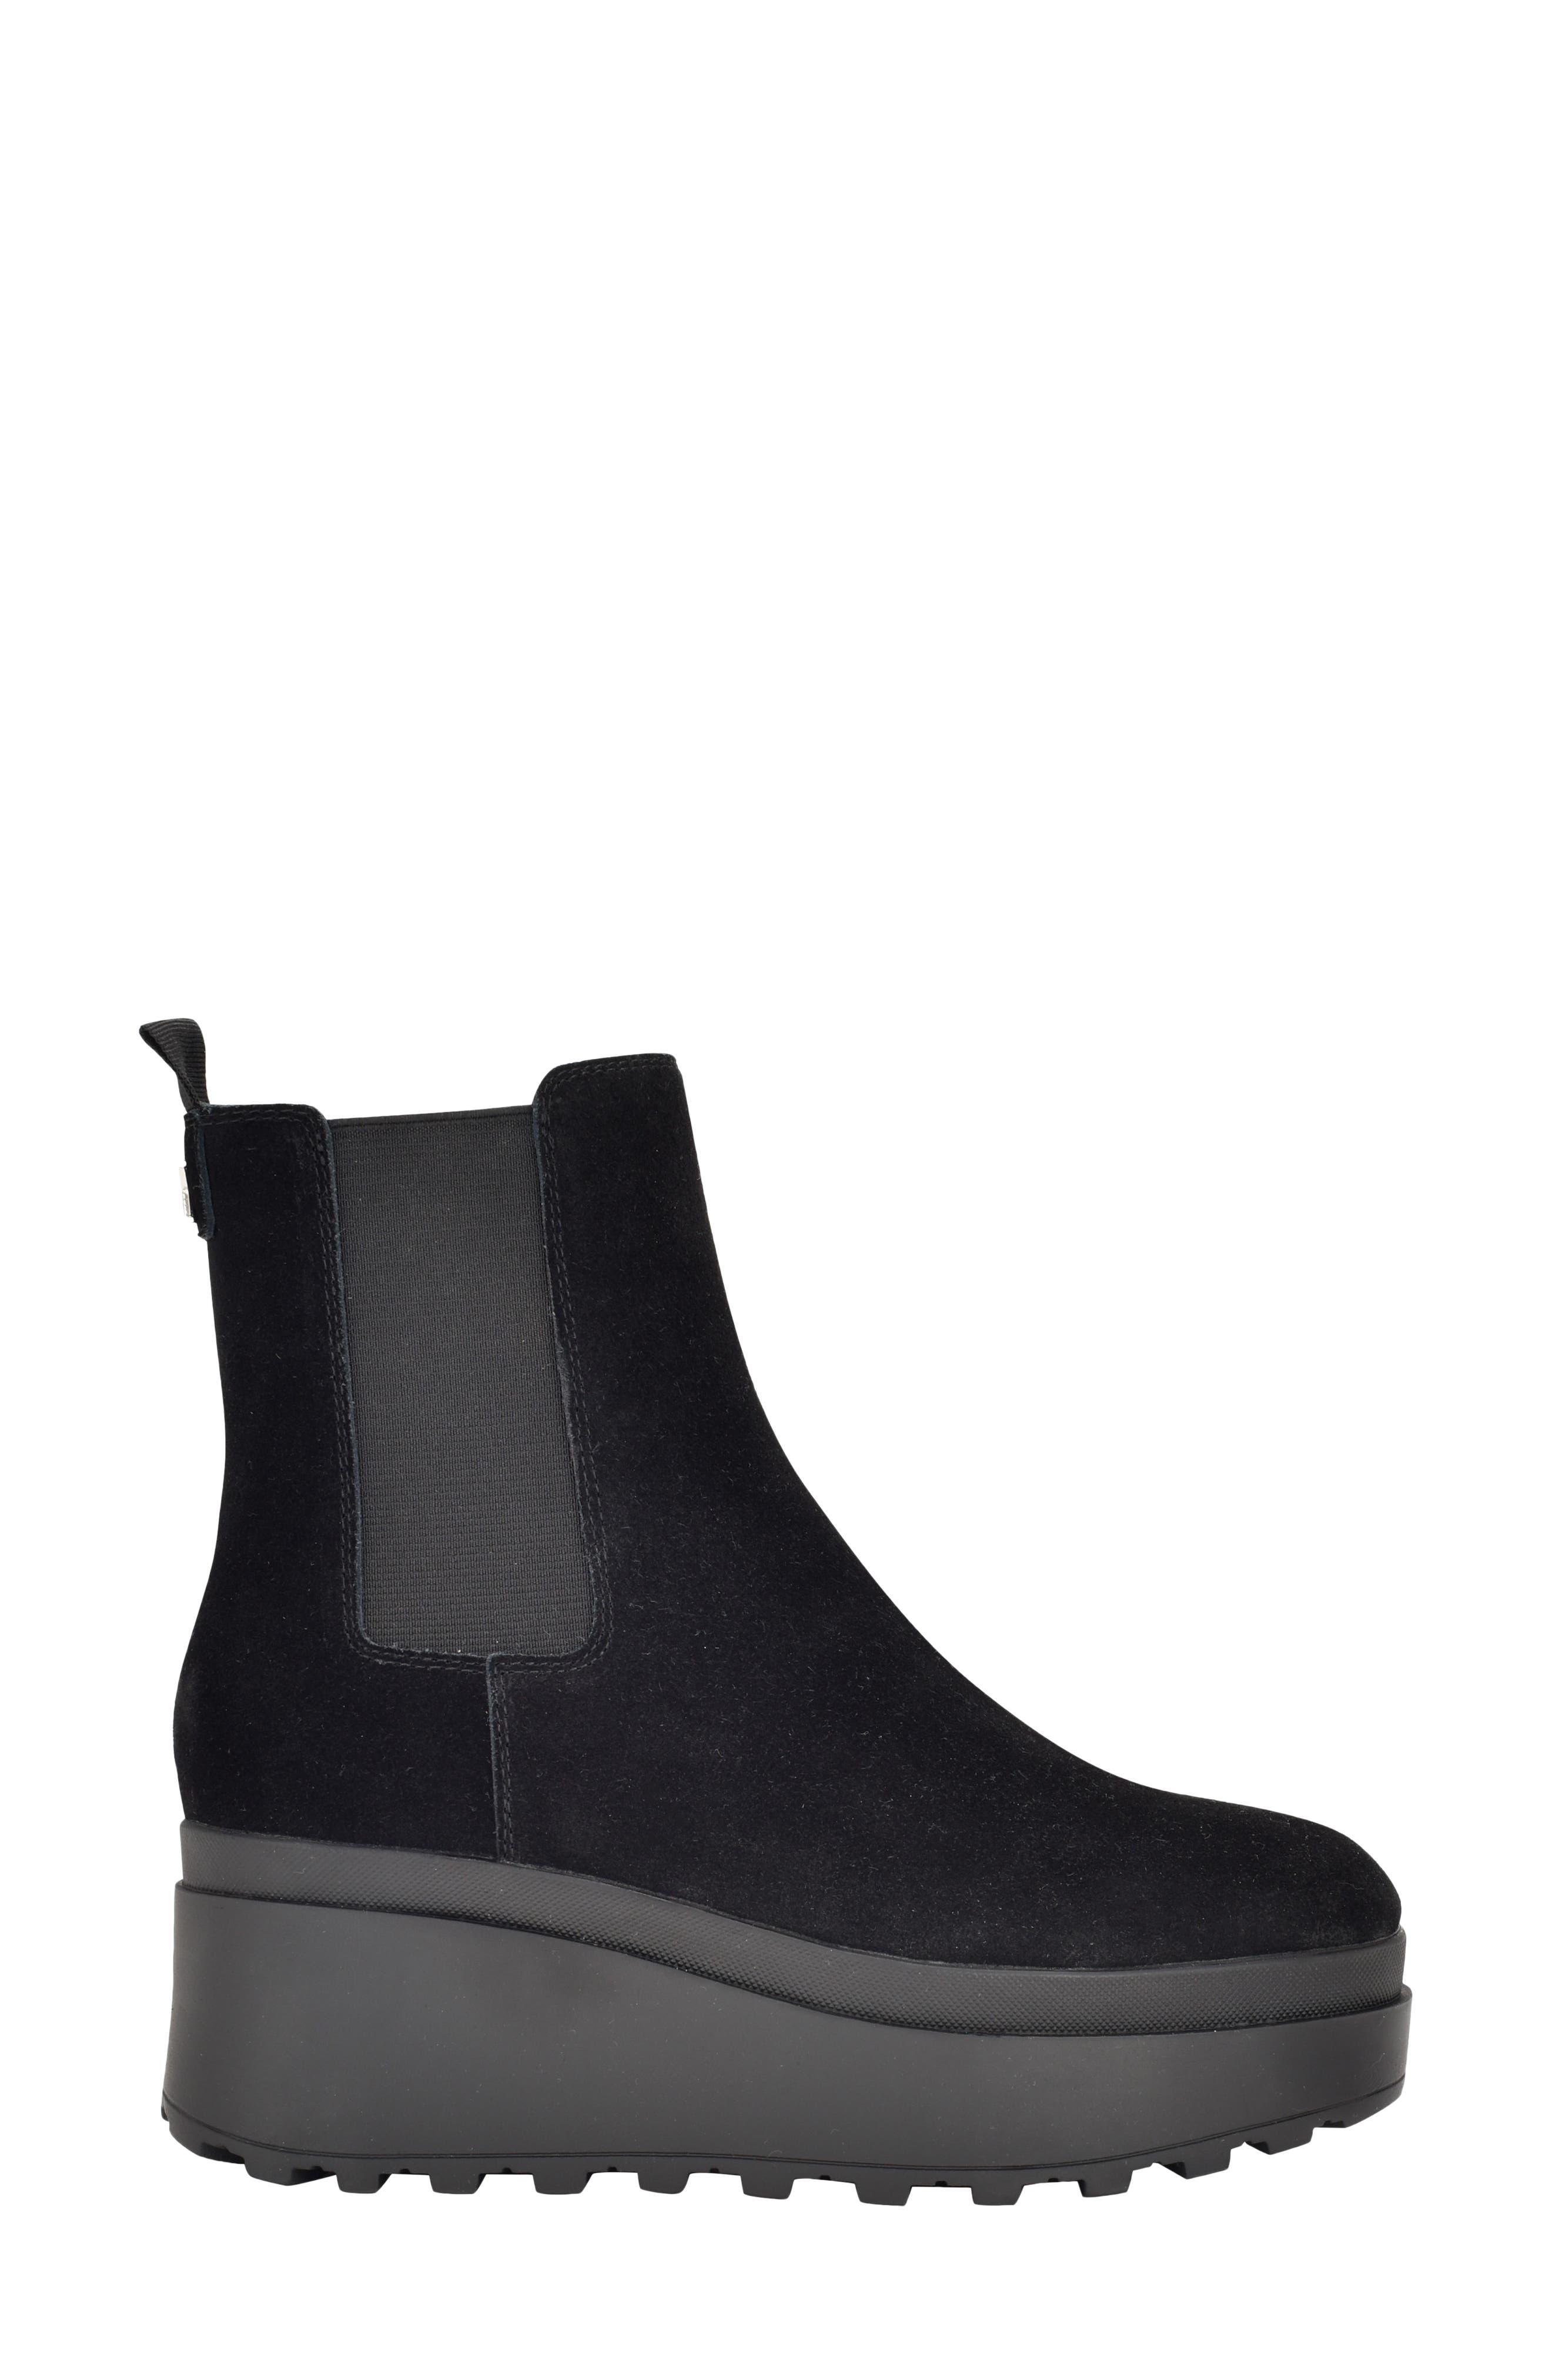 Calvin Klein Nevia Wedge Chelsea Boot in Black | Lyst